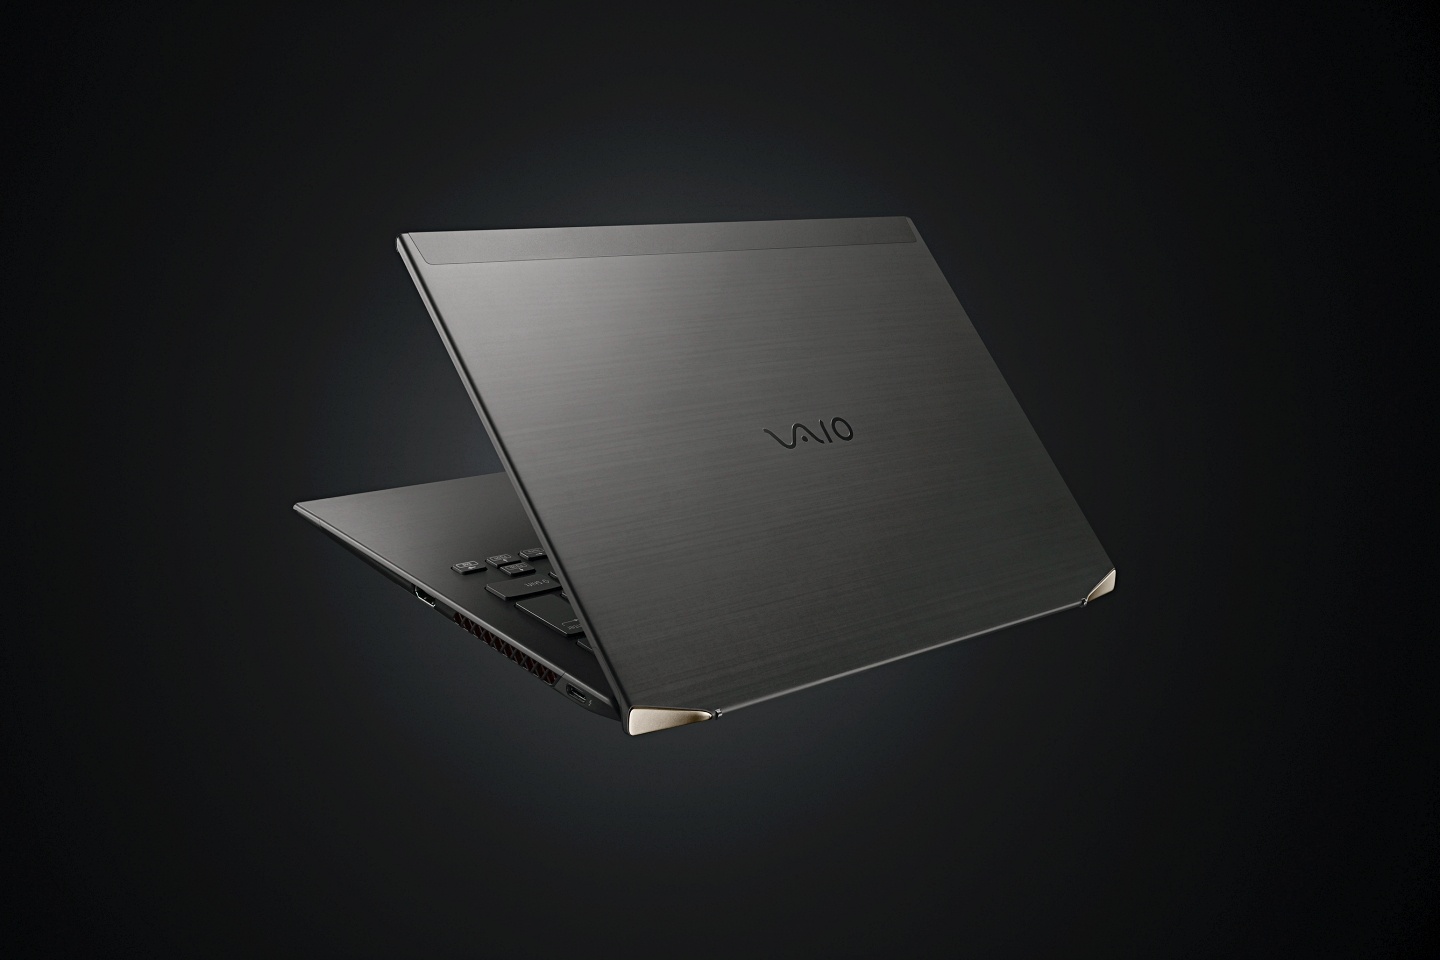 VAIO 推出新款旗艦筆電『 VAIO Z 』，全機身採用碳纖維材質，重量不到一公斤！